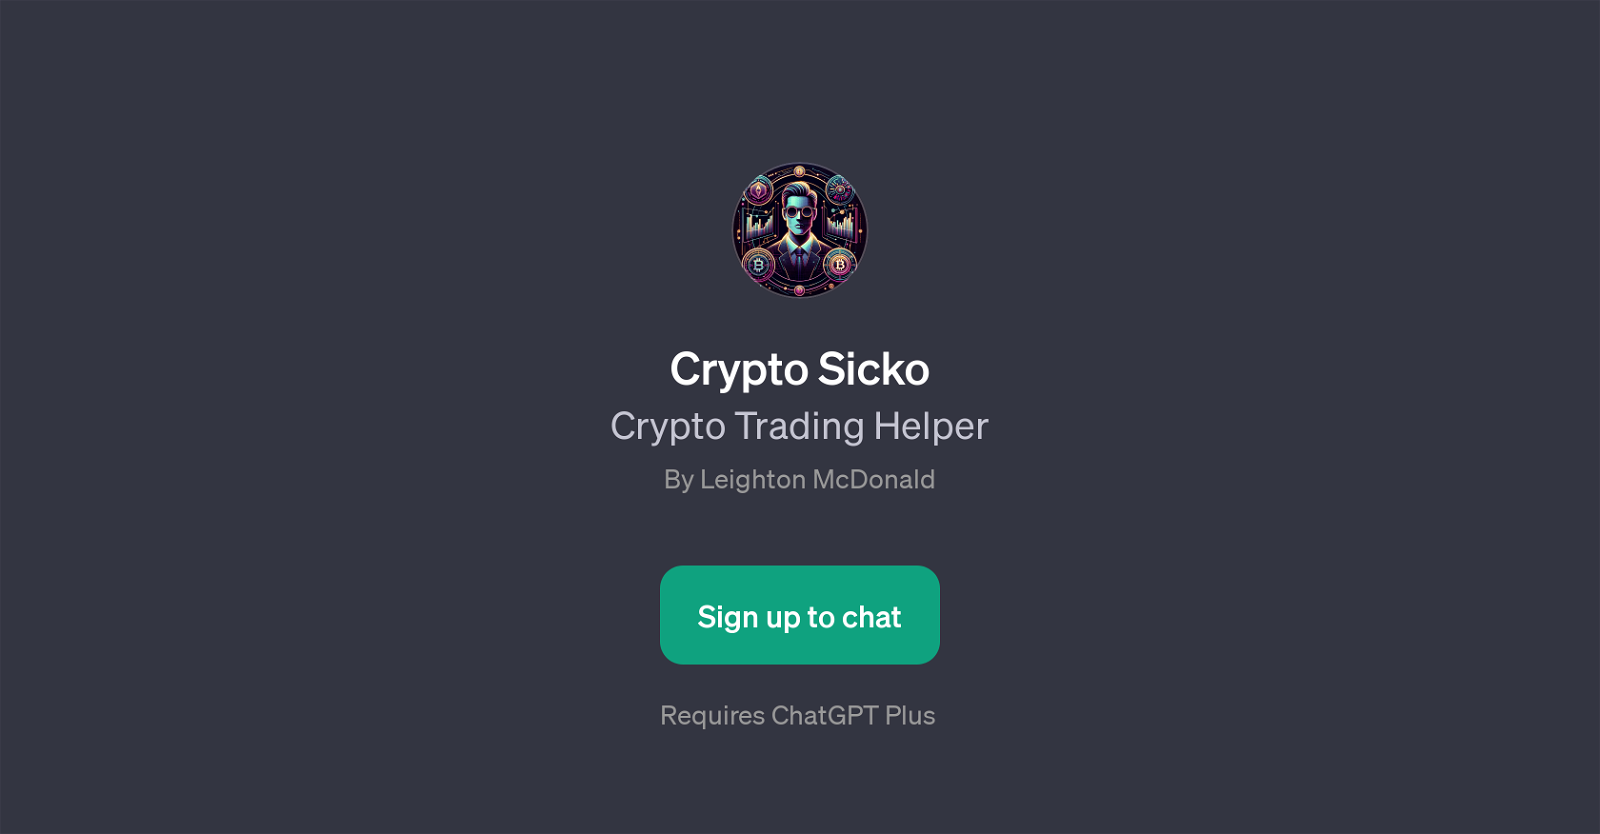 Crypto Sicko website